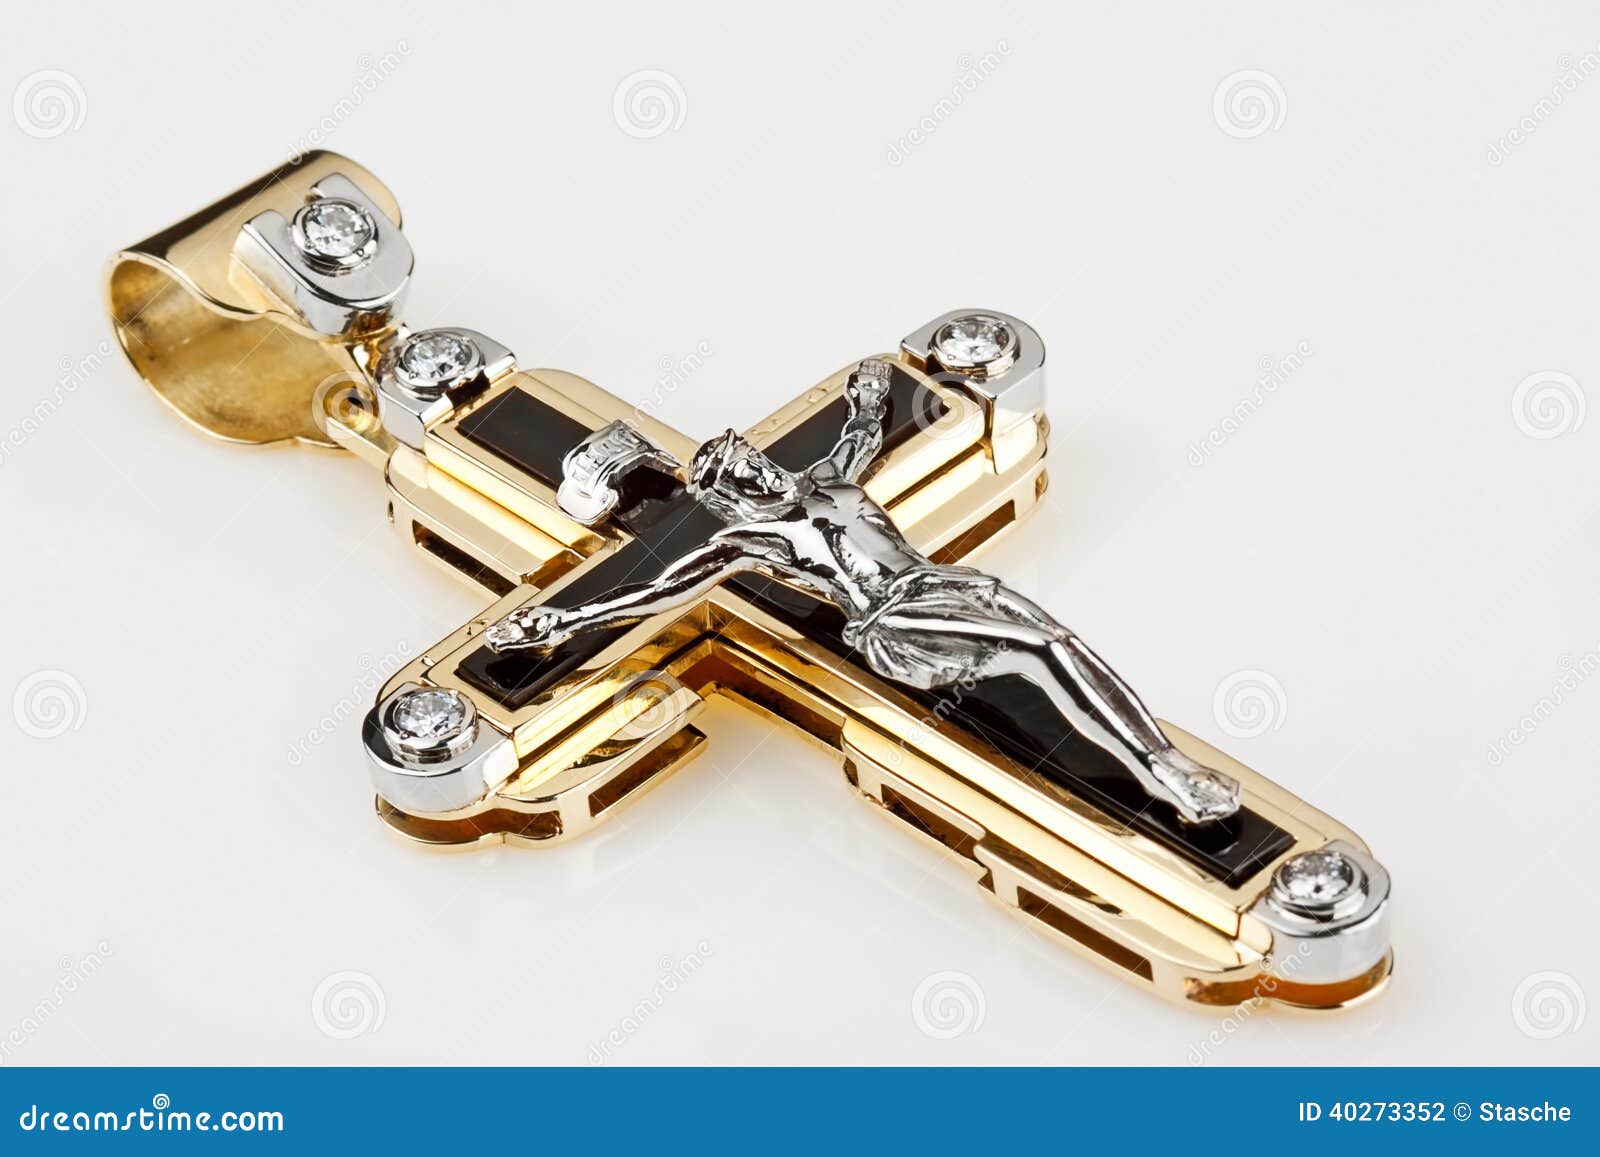 gold cross pendant diamonds big golden volume figure crucified jesus christ onyx white background 40273352